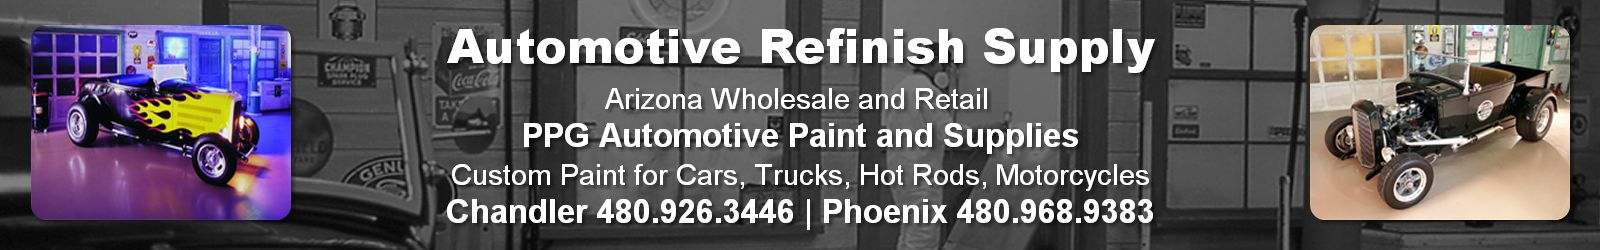 Automotive Refinish Supply - Phoenix, Arizona 